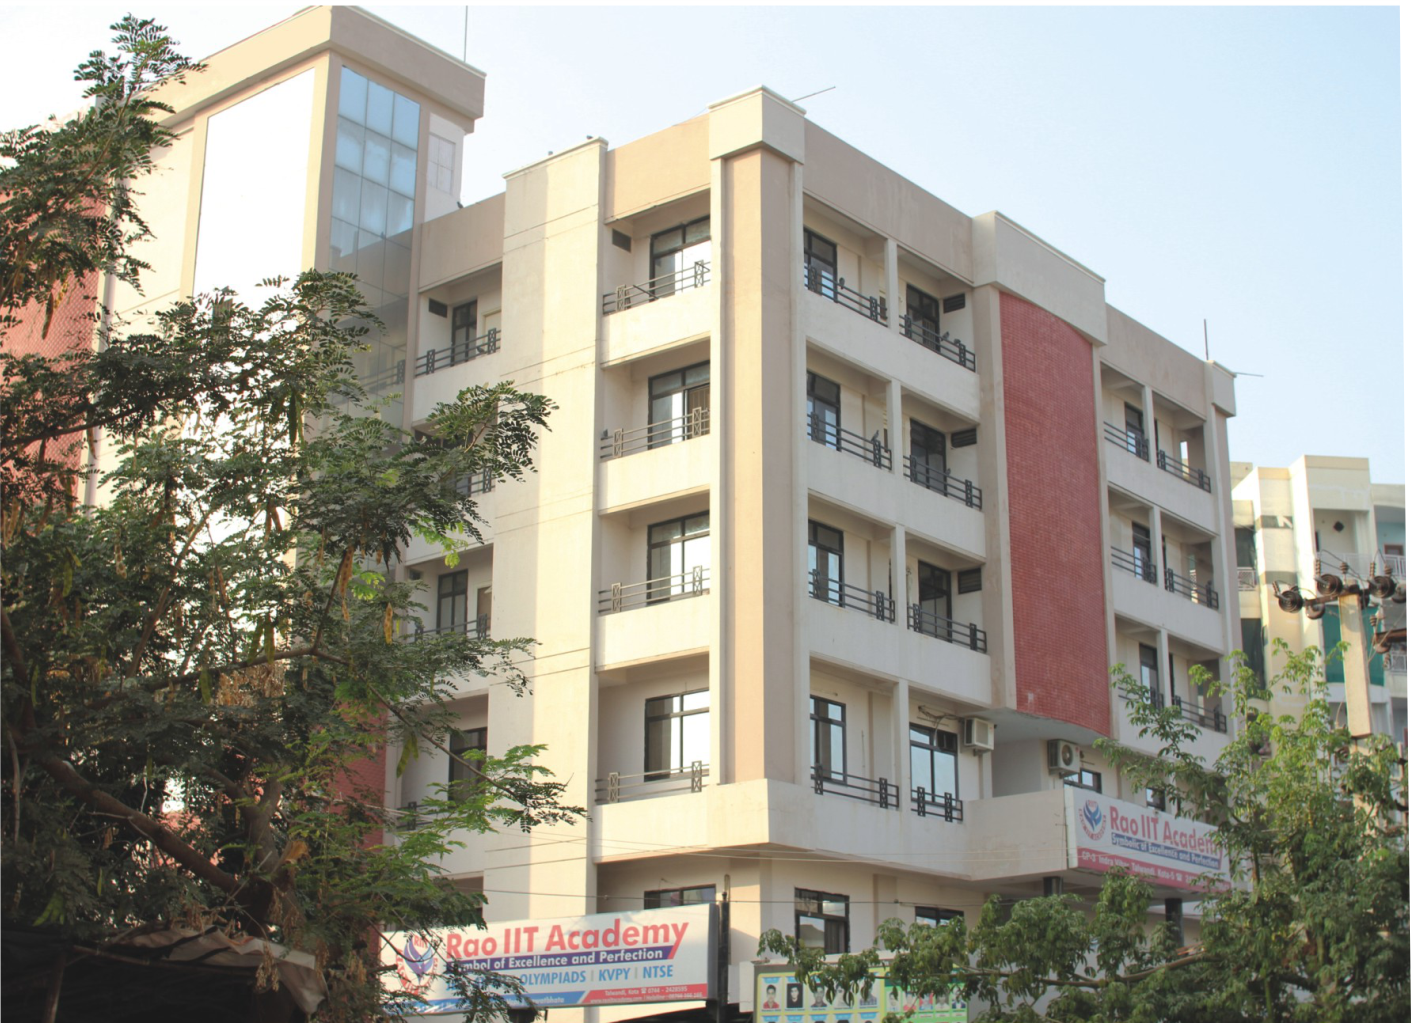 Rao IIT Academy - Kota Centre 